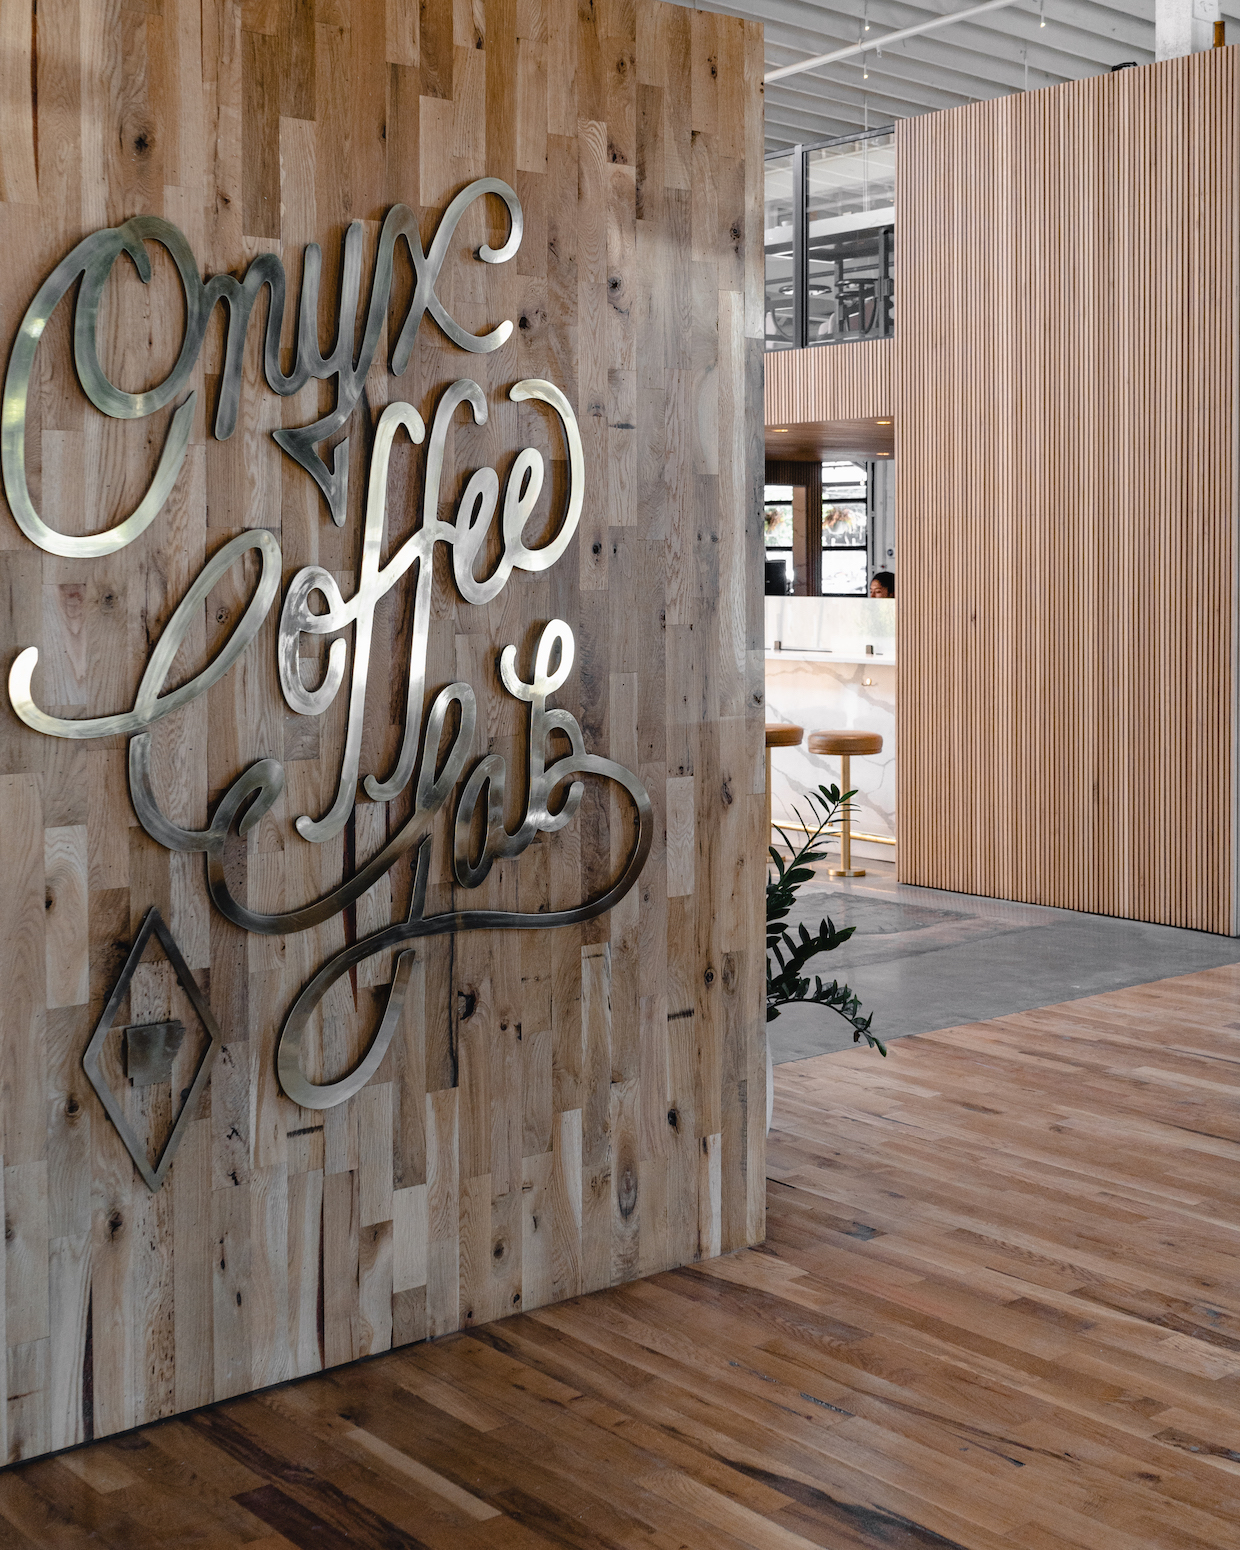 https://dailycoffeenews.com/wp-content/uploads/2019/09/Onyx-Coffee-Lab.jpg